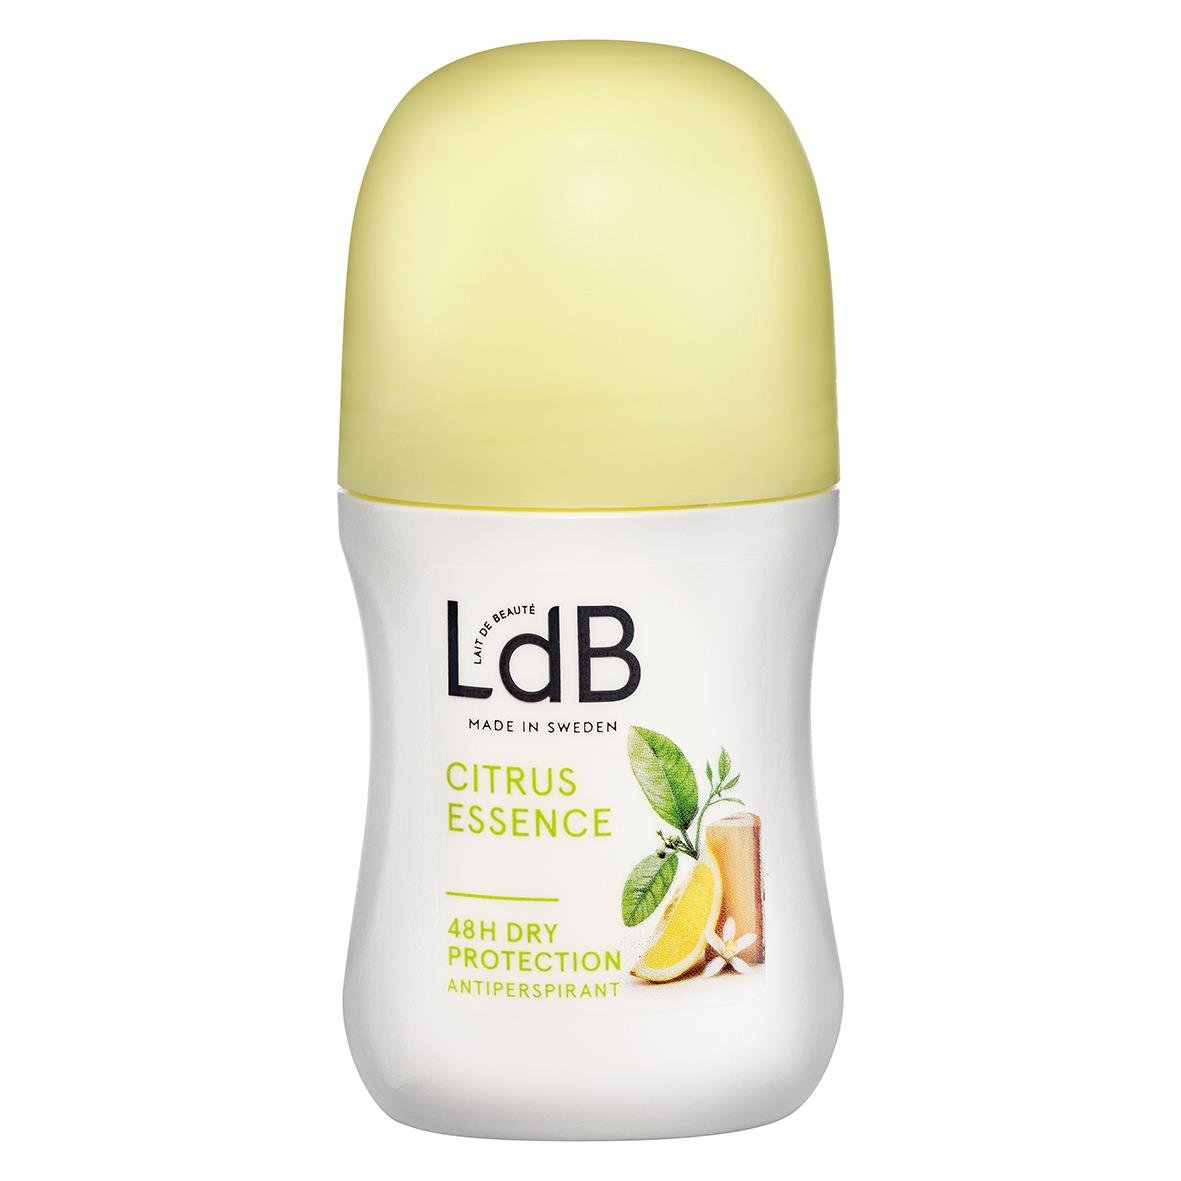 Roll-on LDB Citrus Essence anti-perspirant